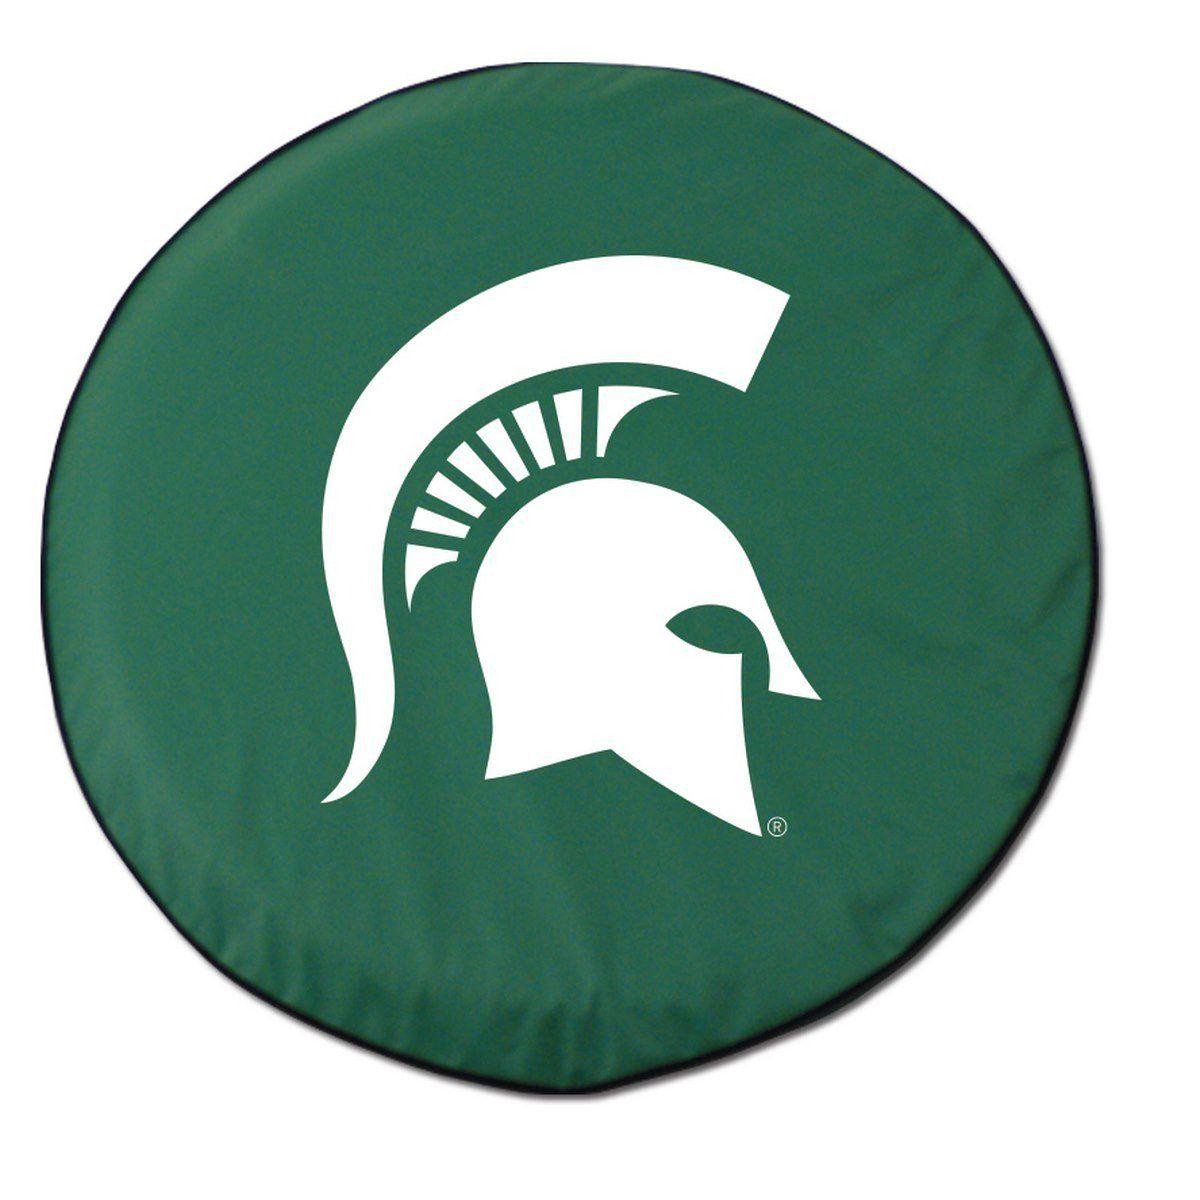 Green Spartan Logo - Amazon.com : Michigan State University Tire Cover with Spartan logo ...